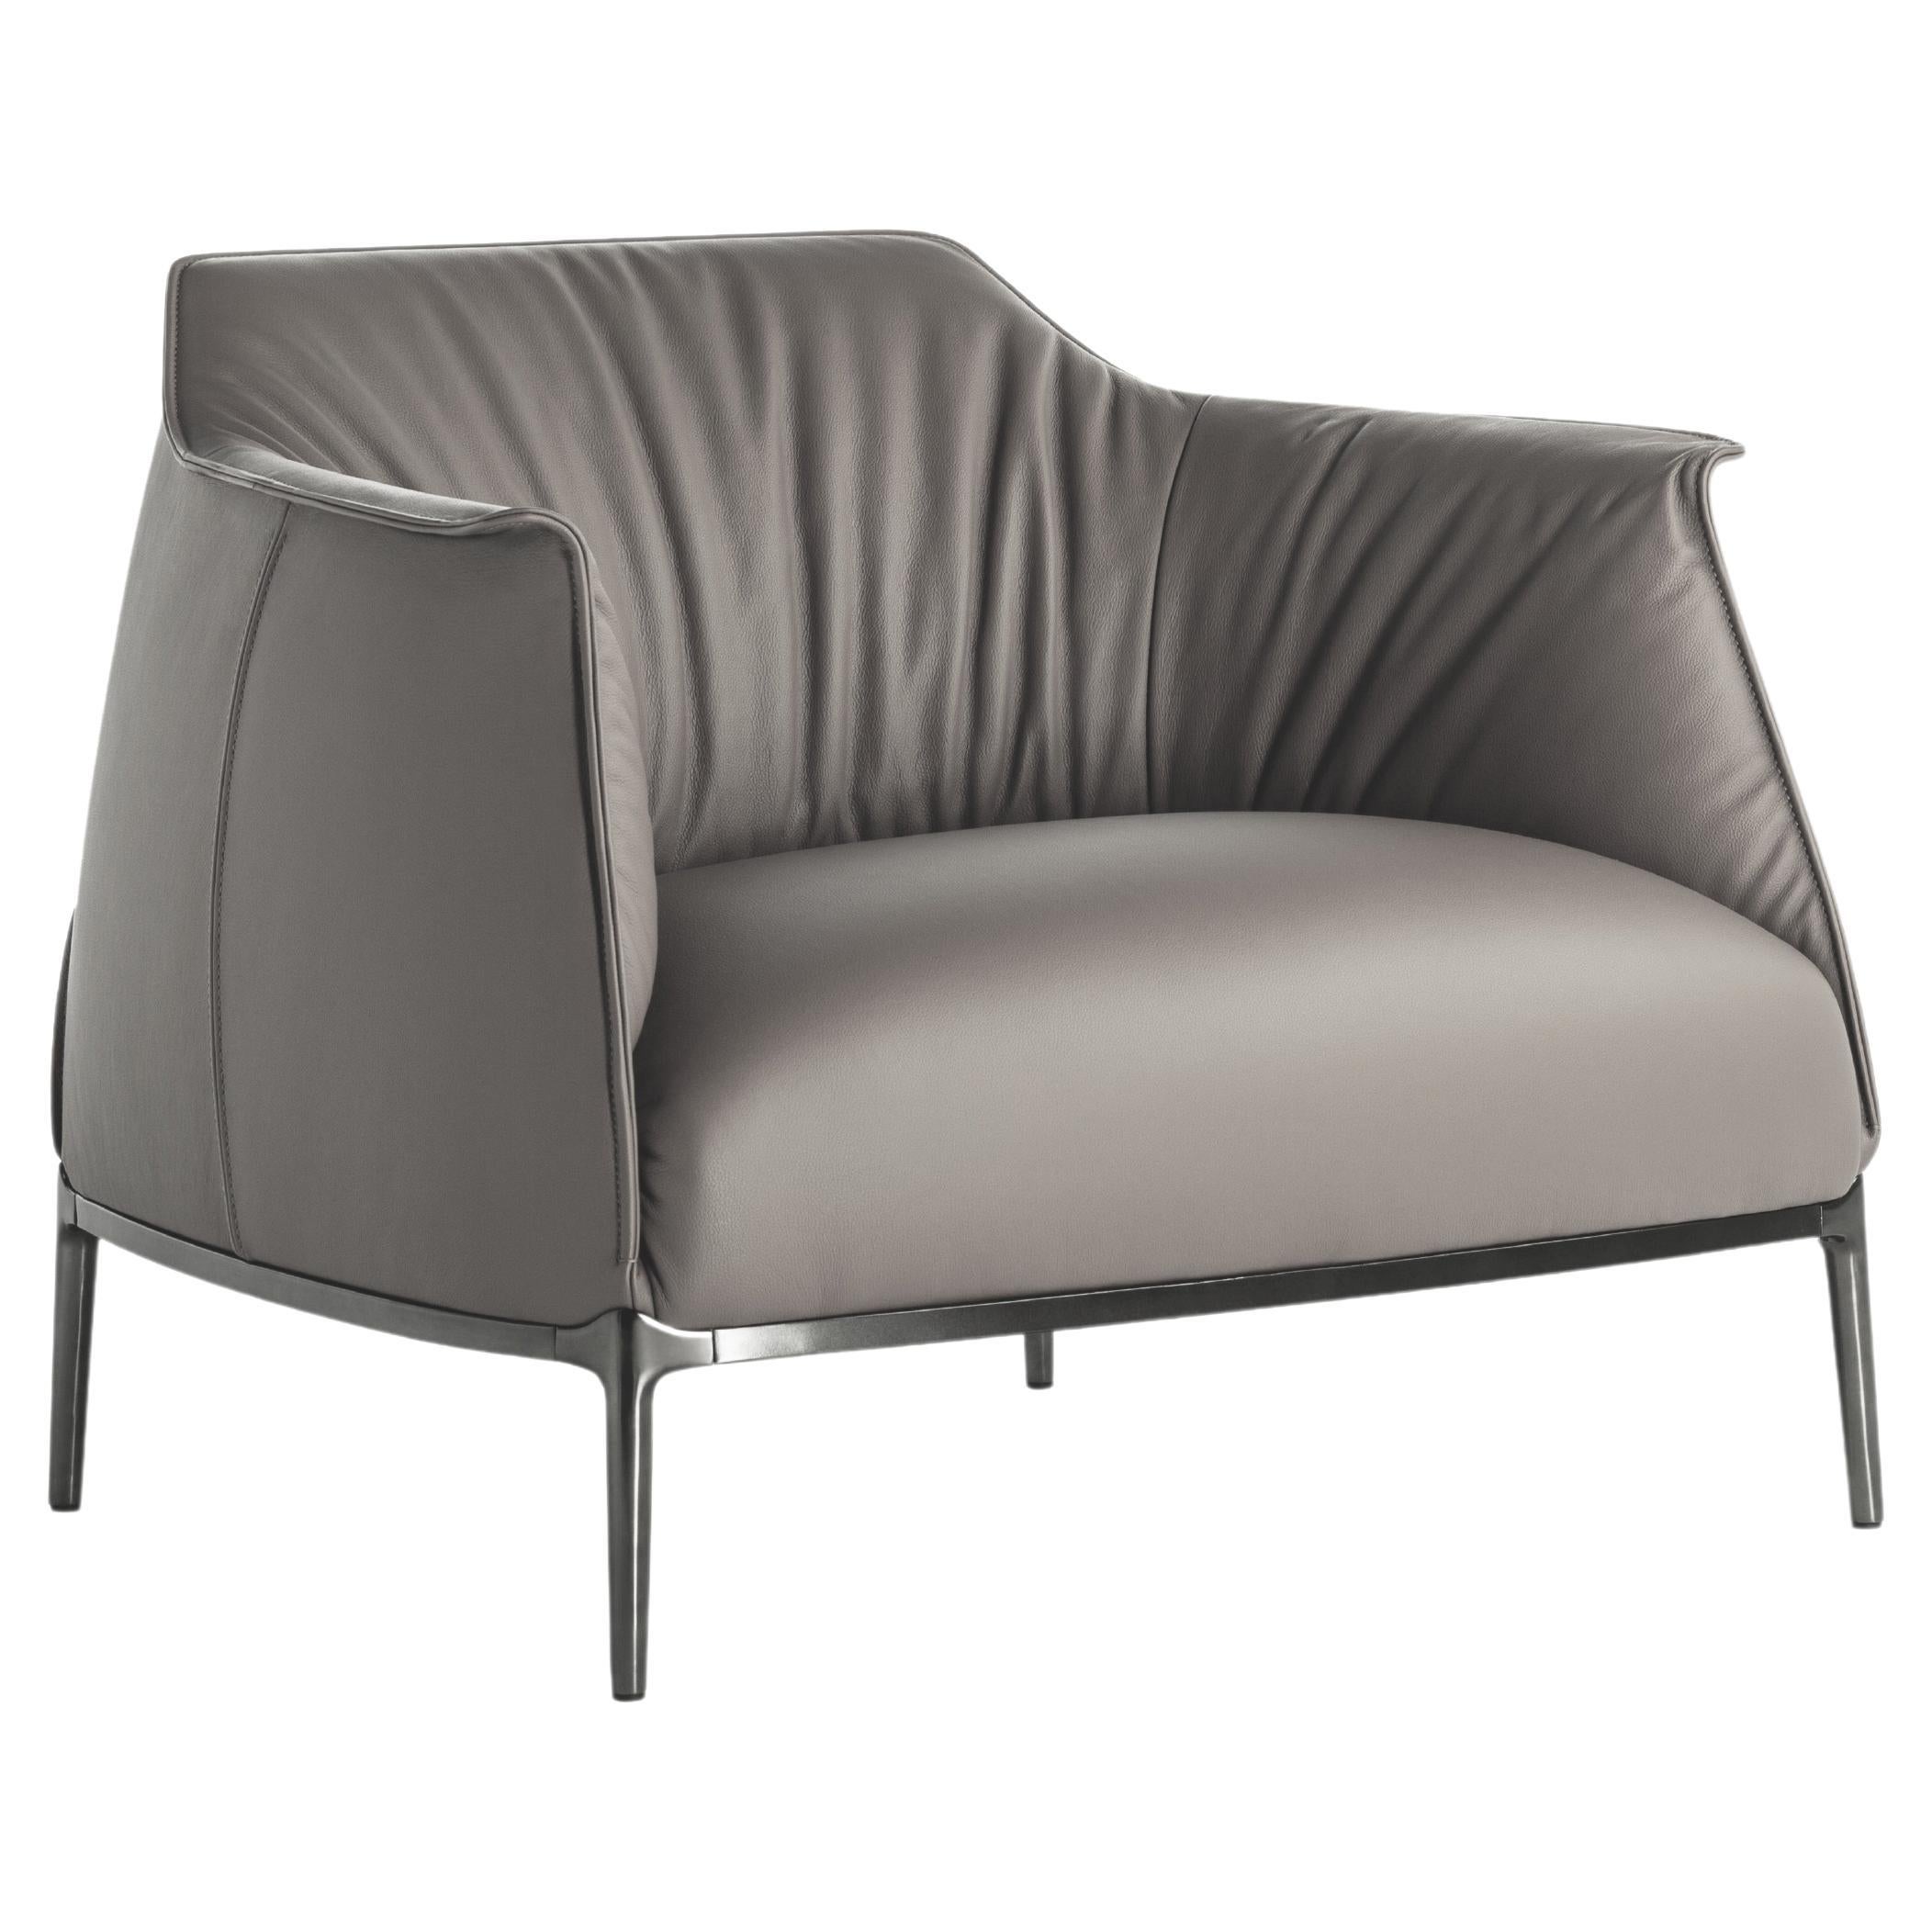 Archibald grand fauteuil en cuir véritable Pelle Sc 26 Topo gris clair